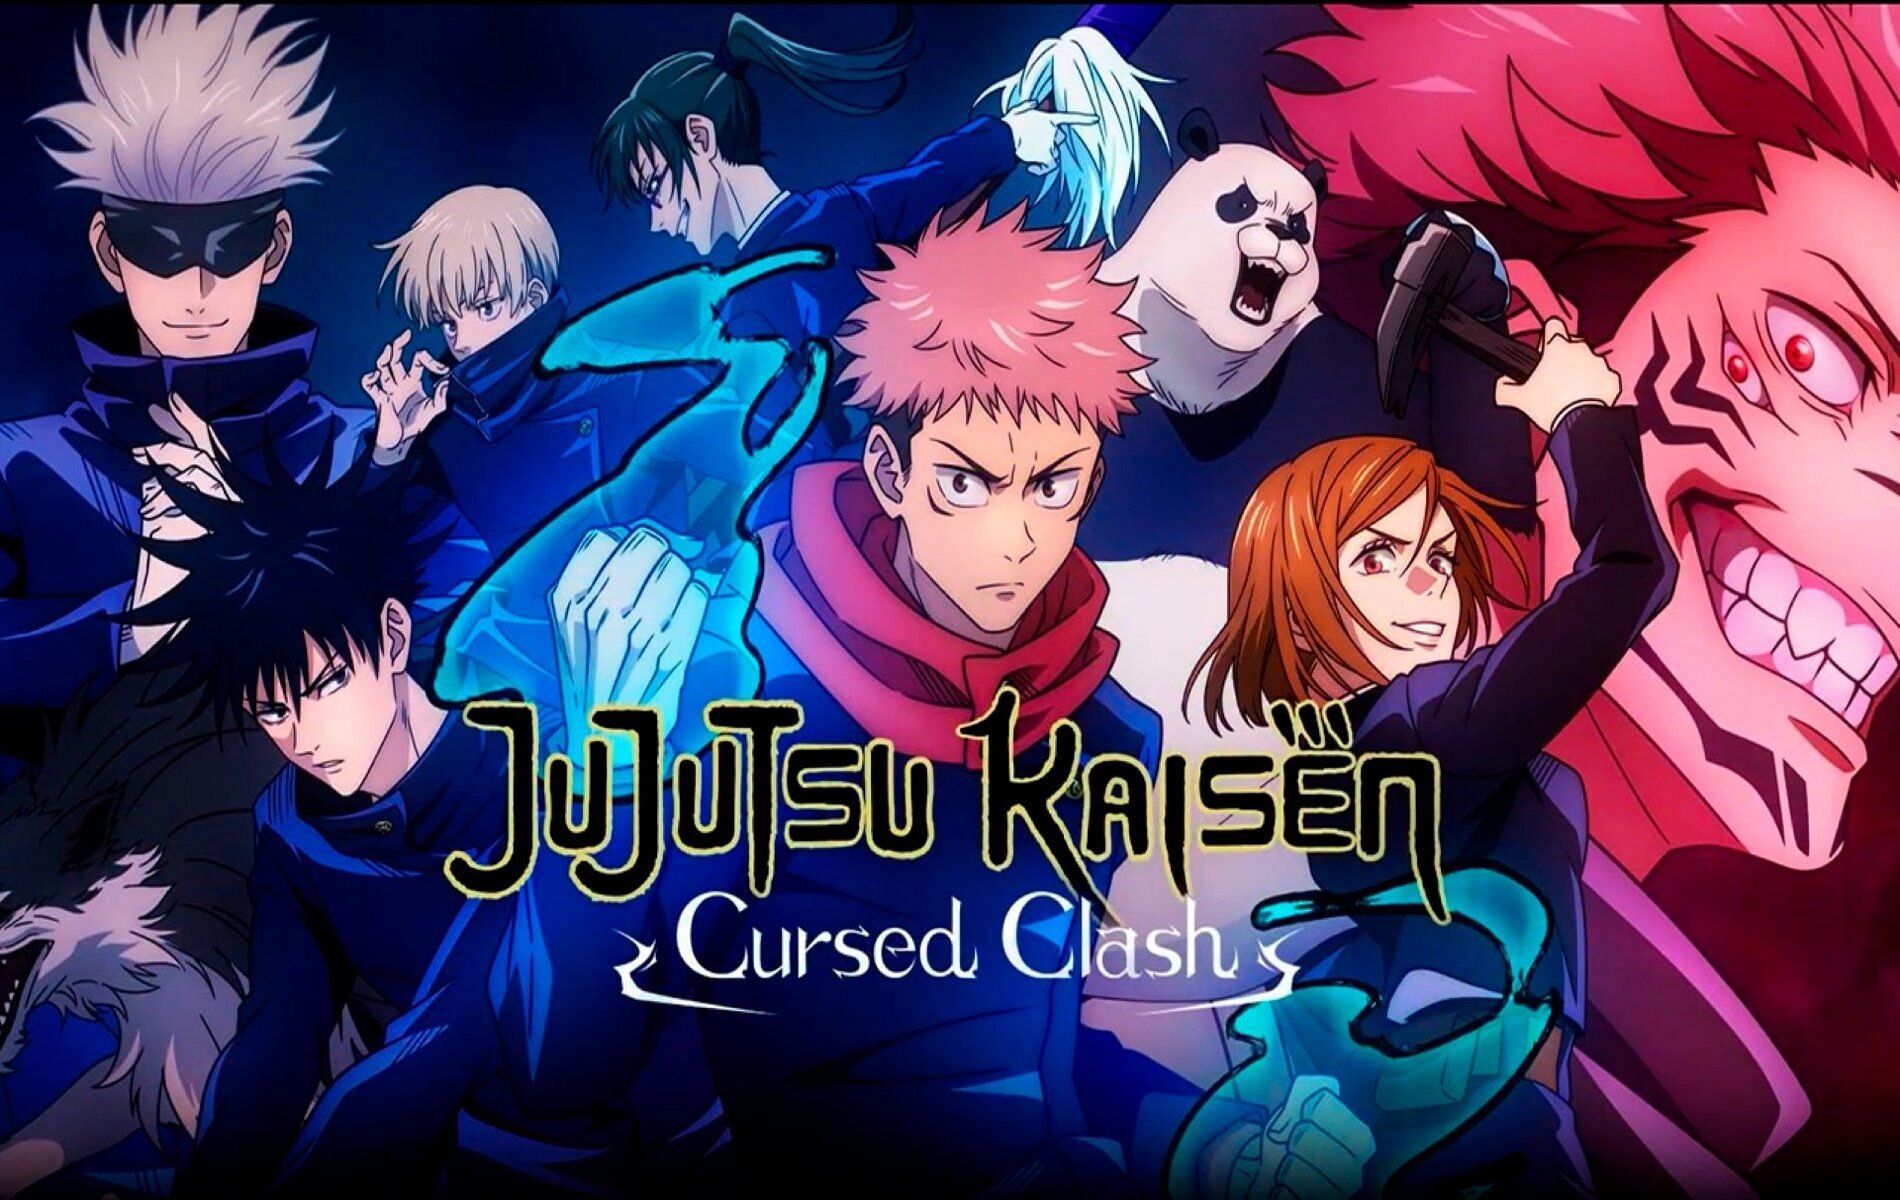 Cover art for Jujutsu Kaisen Cursed Clash